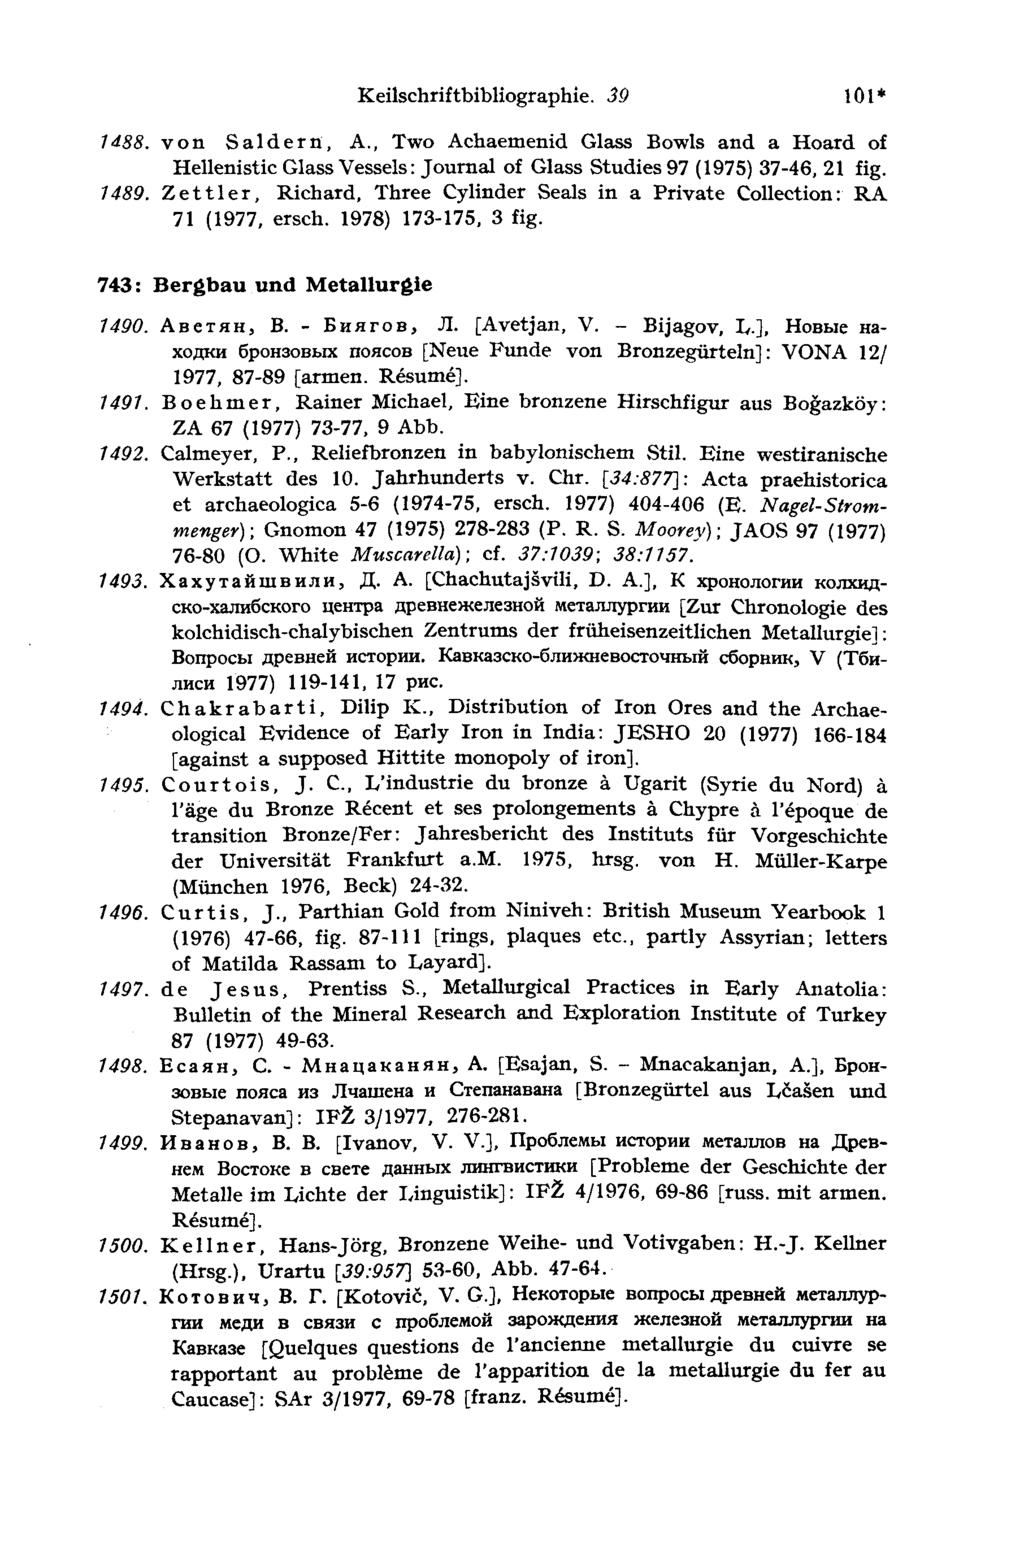 Keilschriftbibliographie. 30 101* 1d88. von Saldern, A., Two Achaemenid Glass Bowls and a Hoard of Hellenistic Glass Vessels: Journal of Glass Studies 97 (1975) 37-46, 21 fig. 1489.